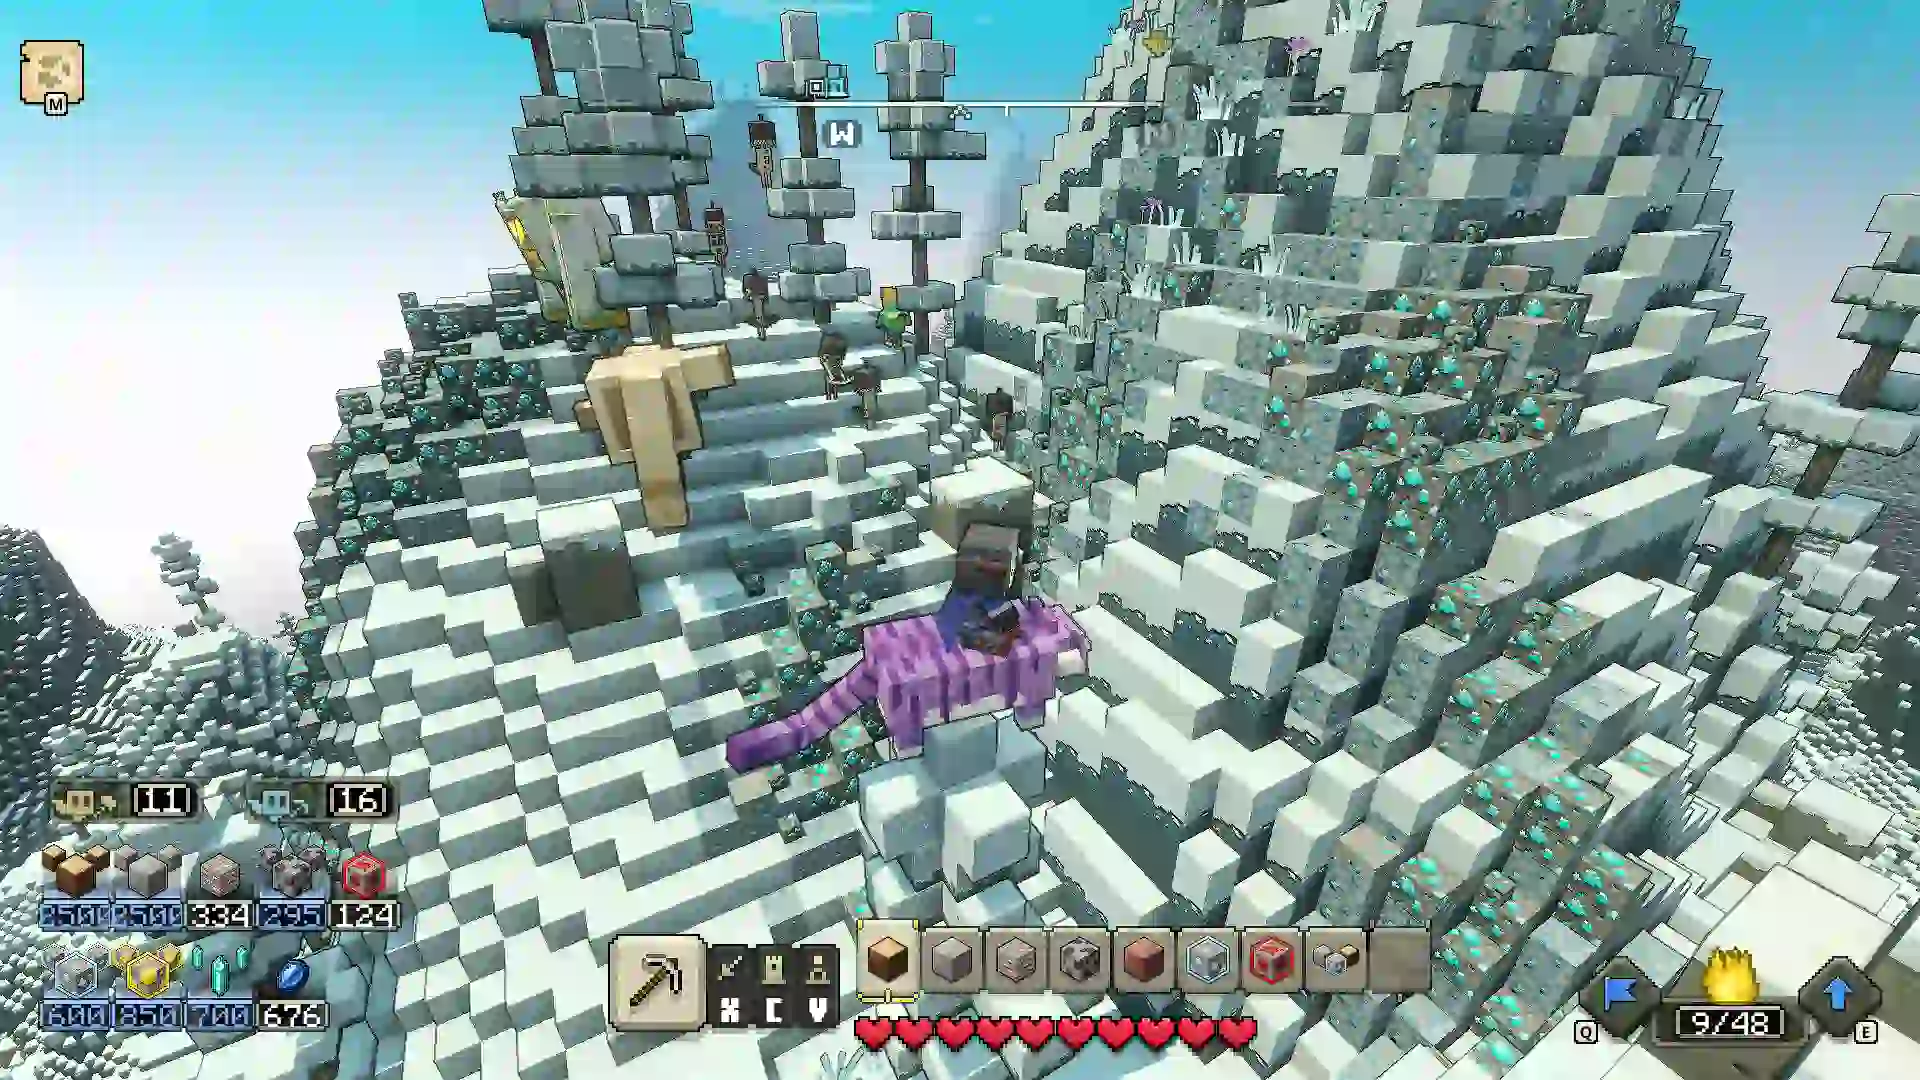 Cara Mendapatkan Diamond di Minecraft Legends